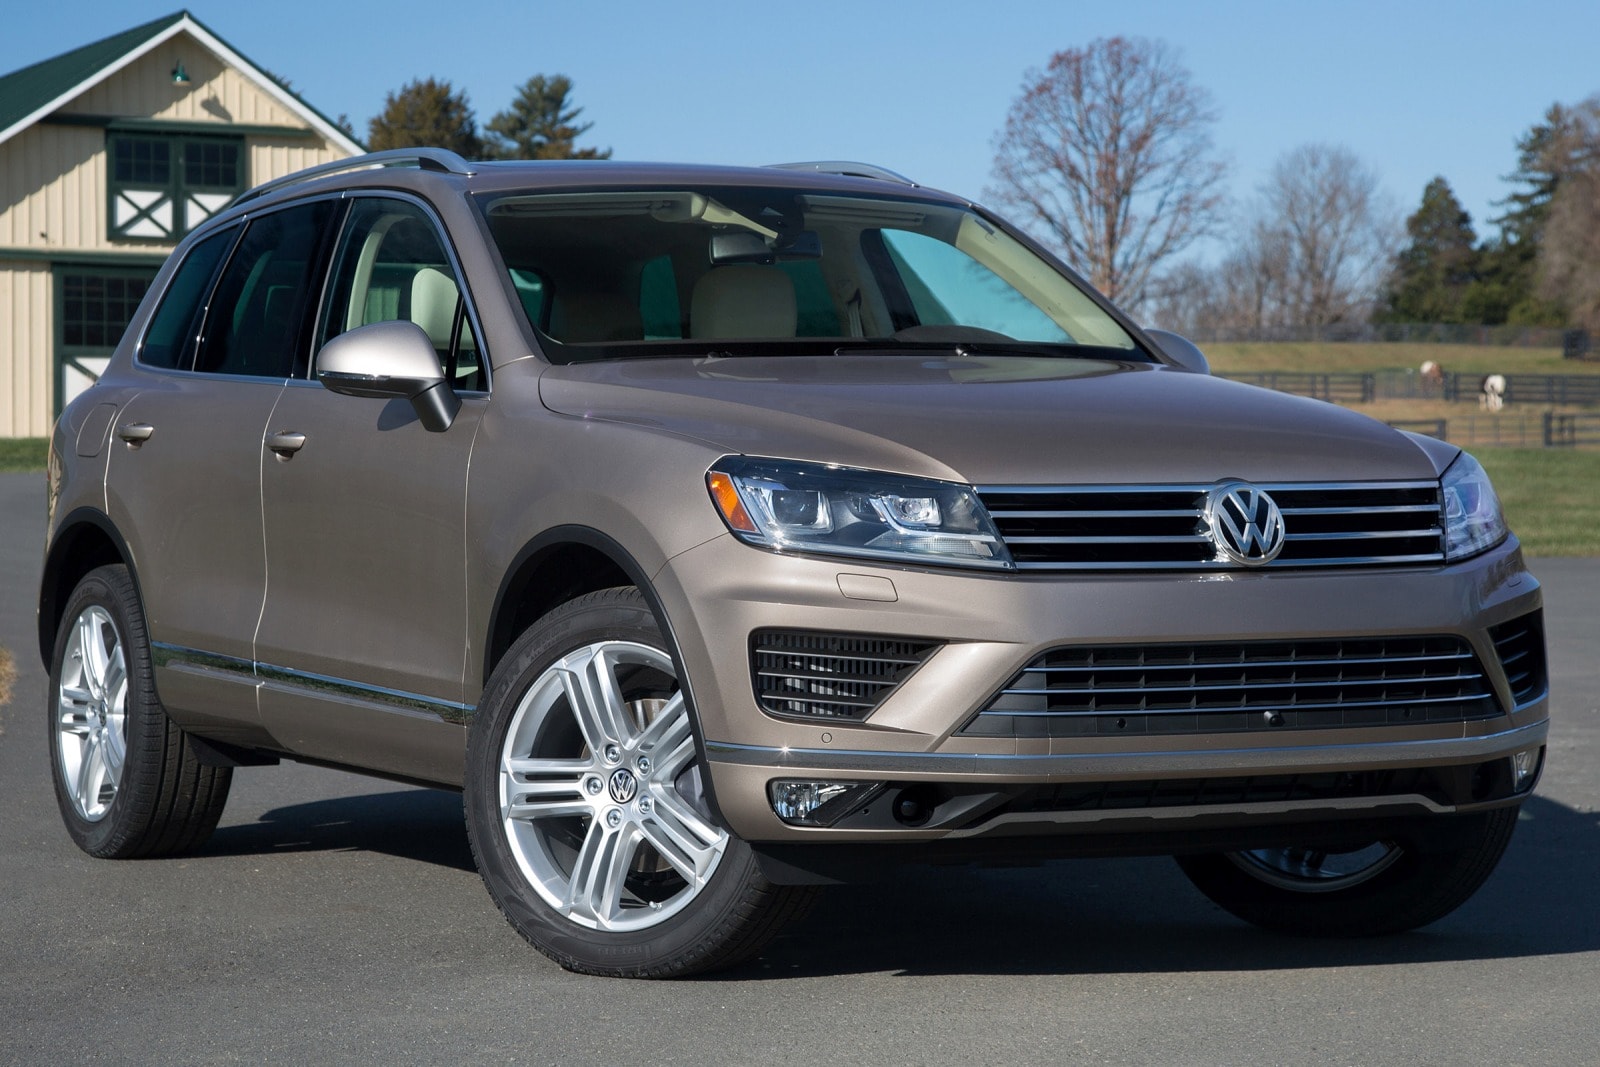 2015 Volkswagen Touareg Review & Ratings | Edmunds